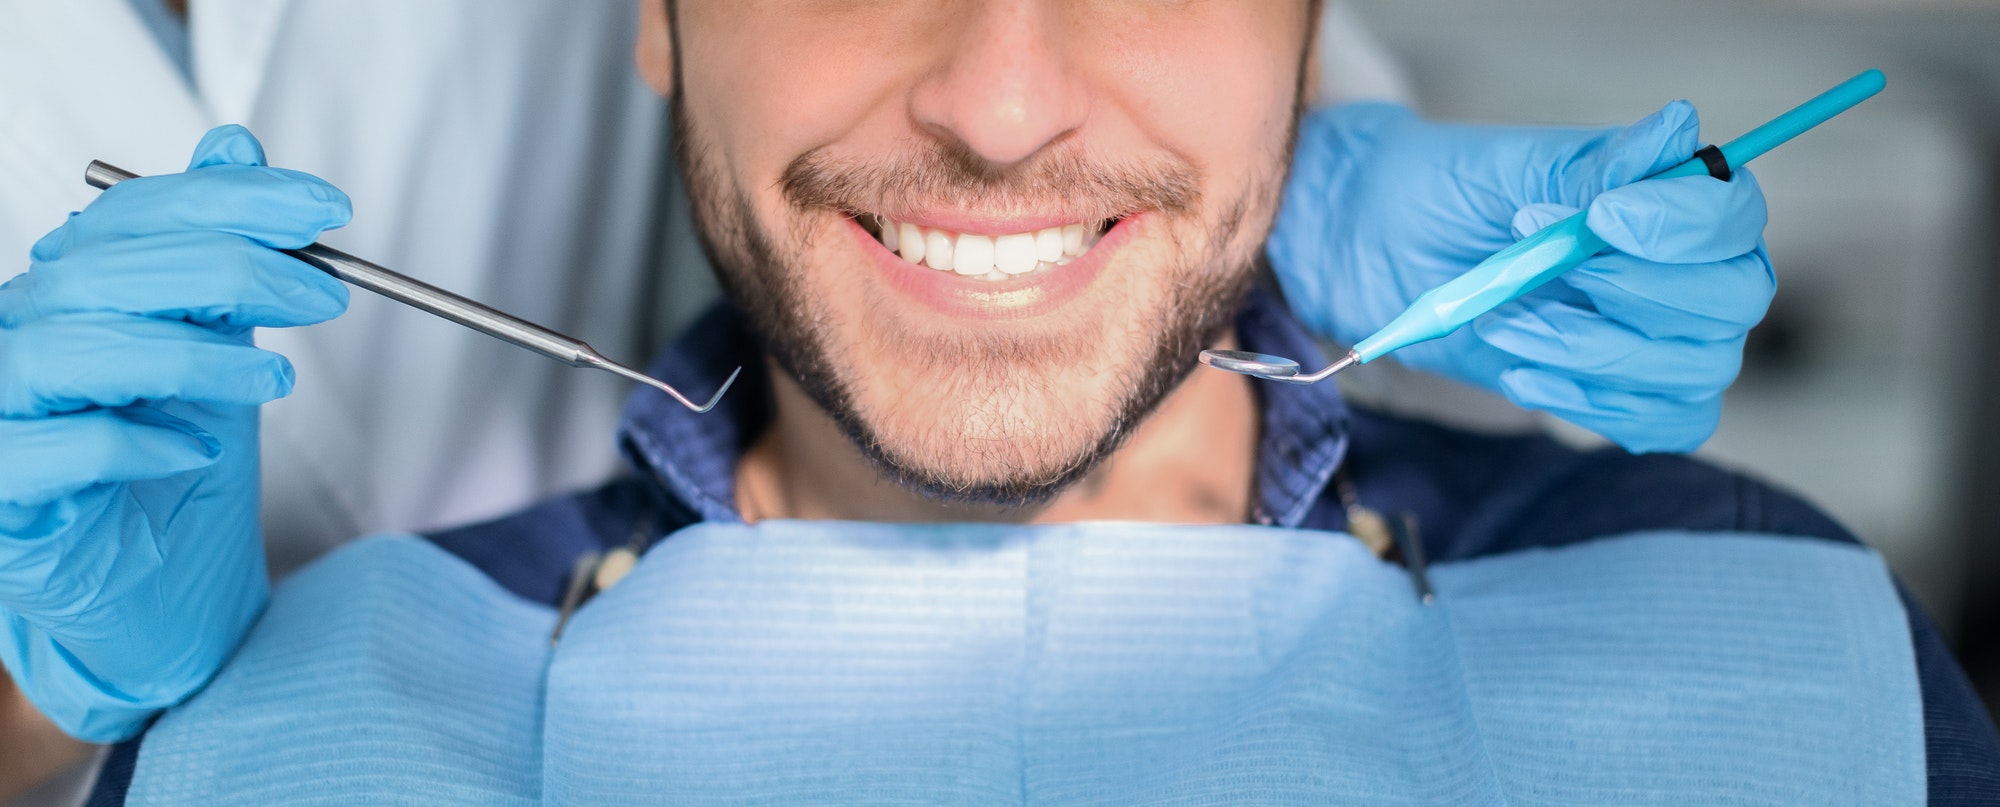 Teeth Whitening - Blanqueamiento Dental